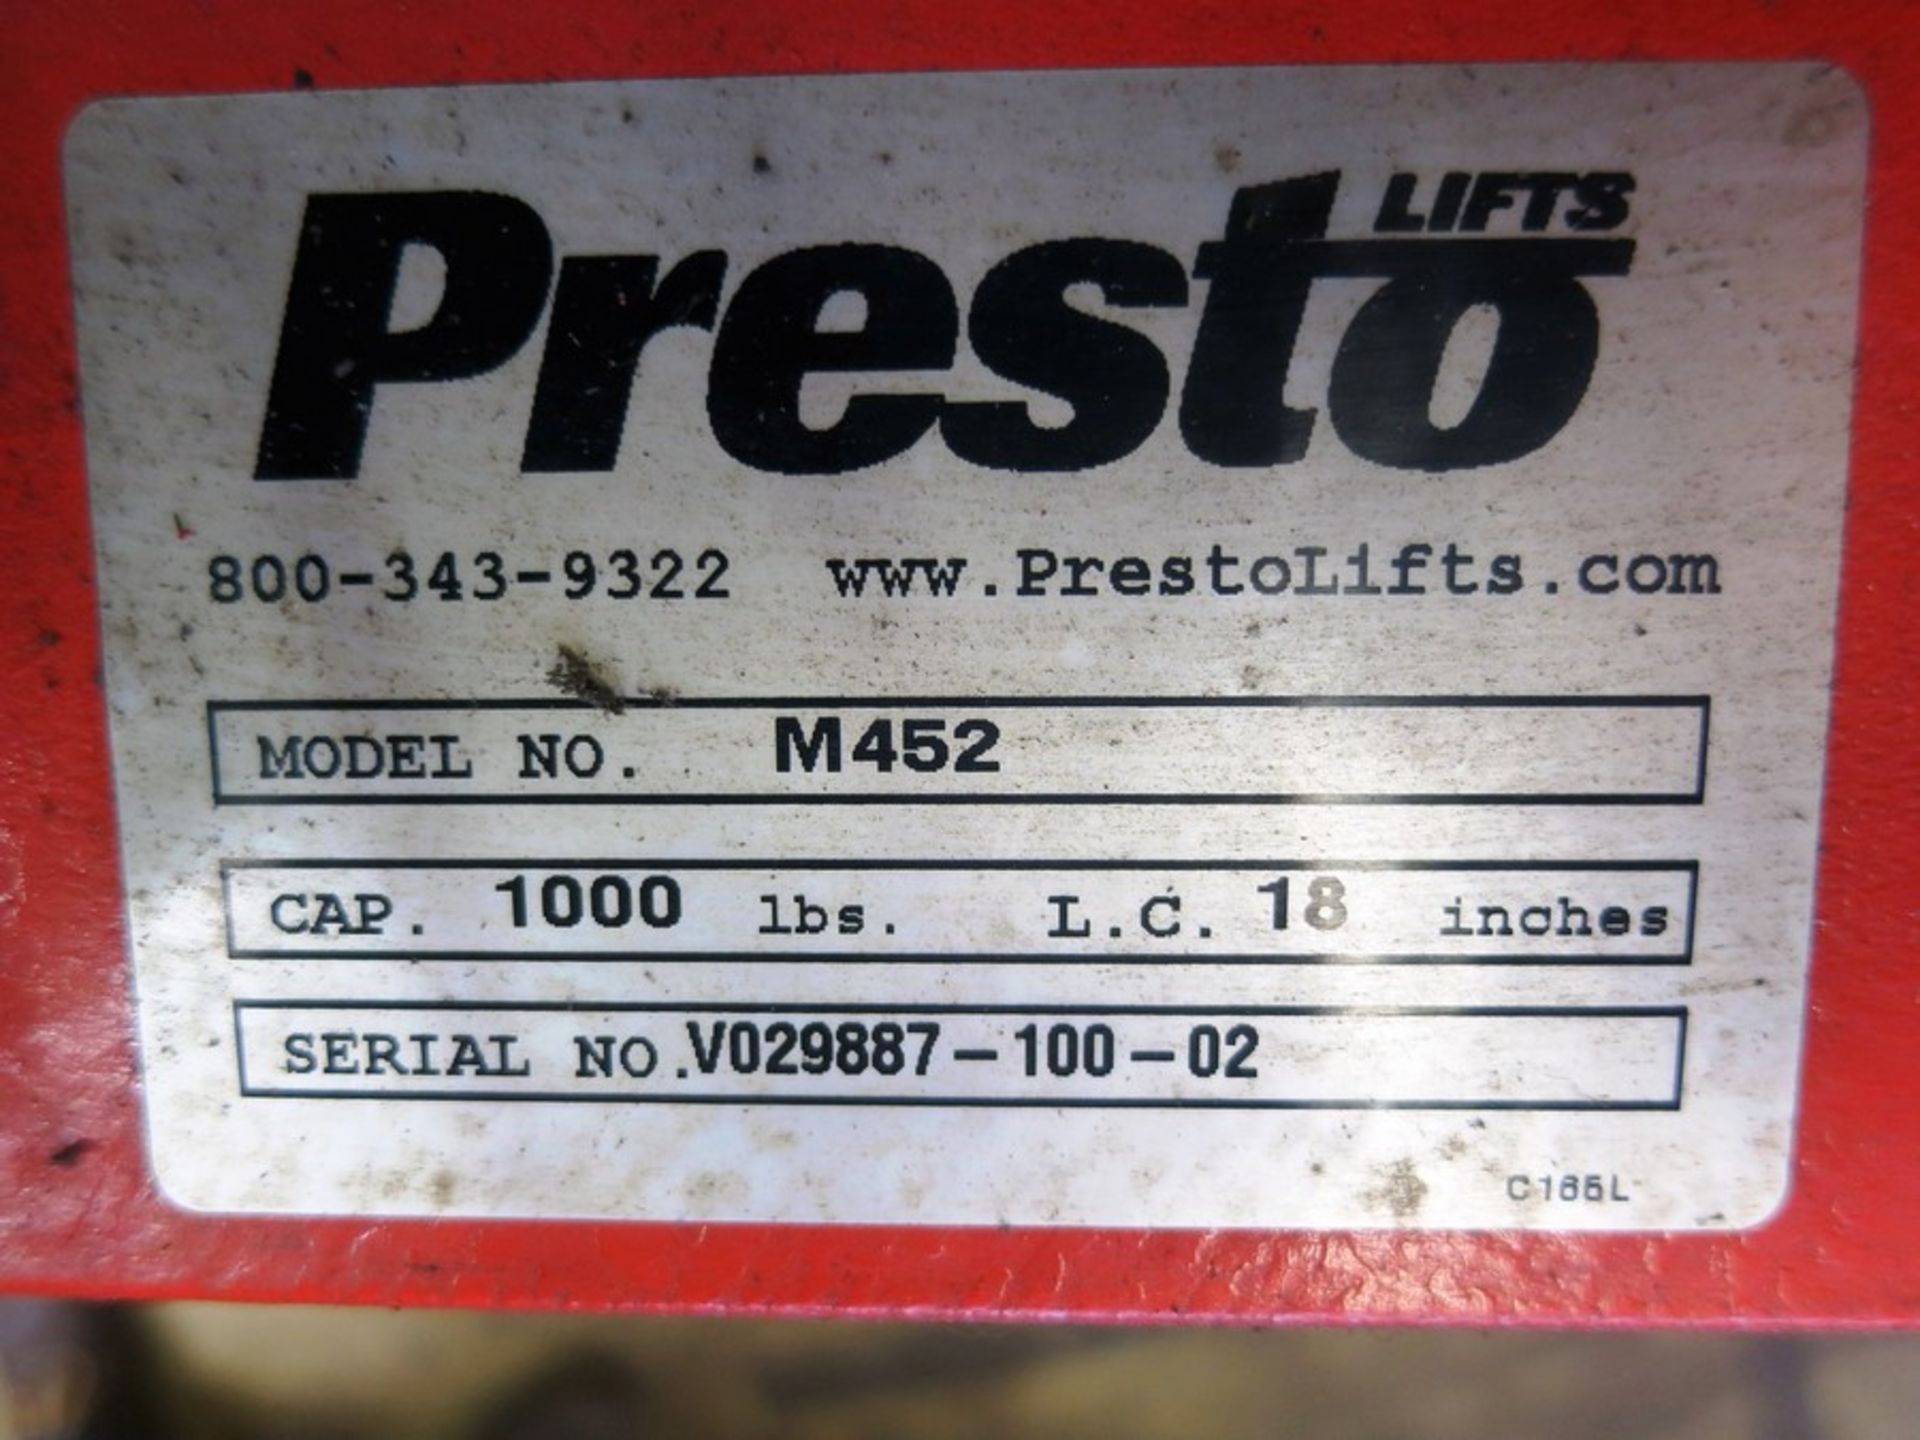 Presto Model M452 1,000 lbs Pallet Lift, S/N V029887-100-02 - Image 2 of 2